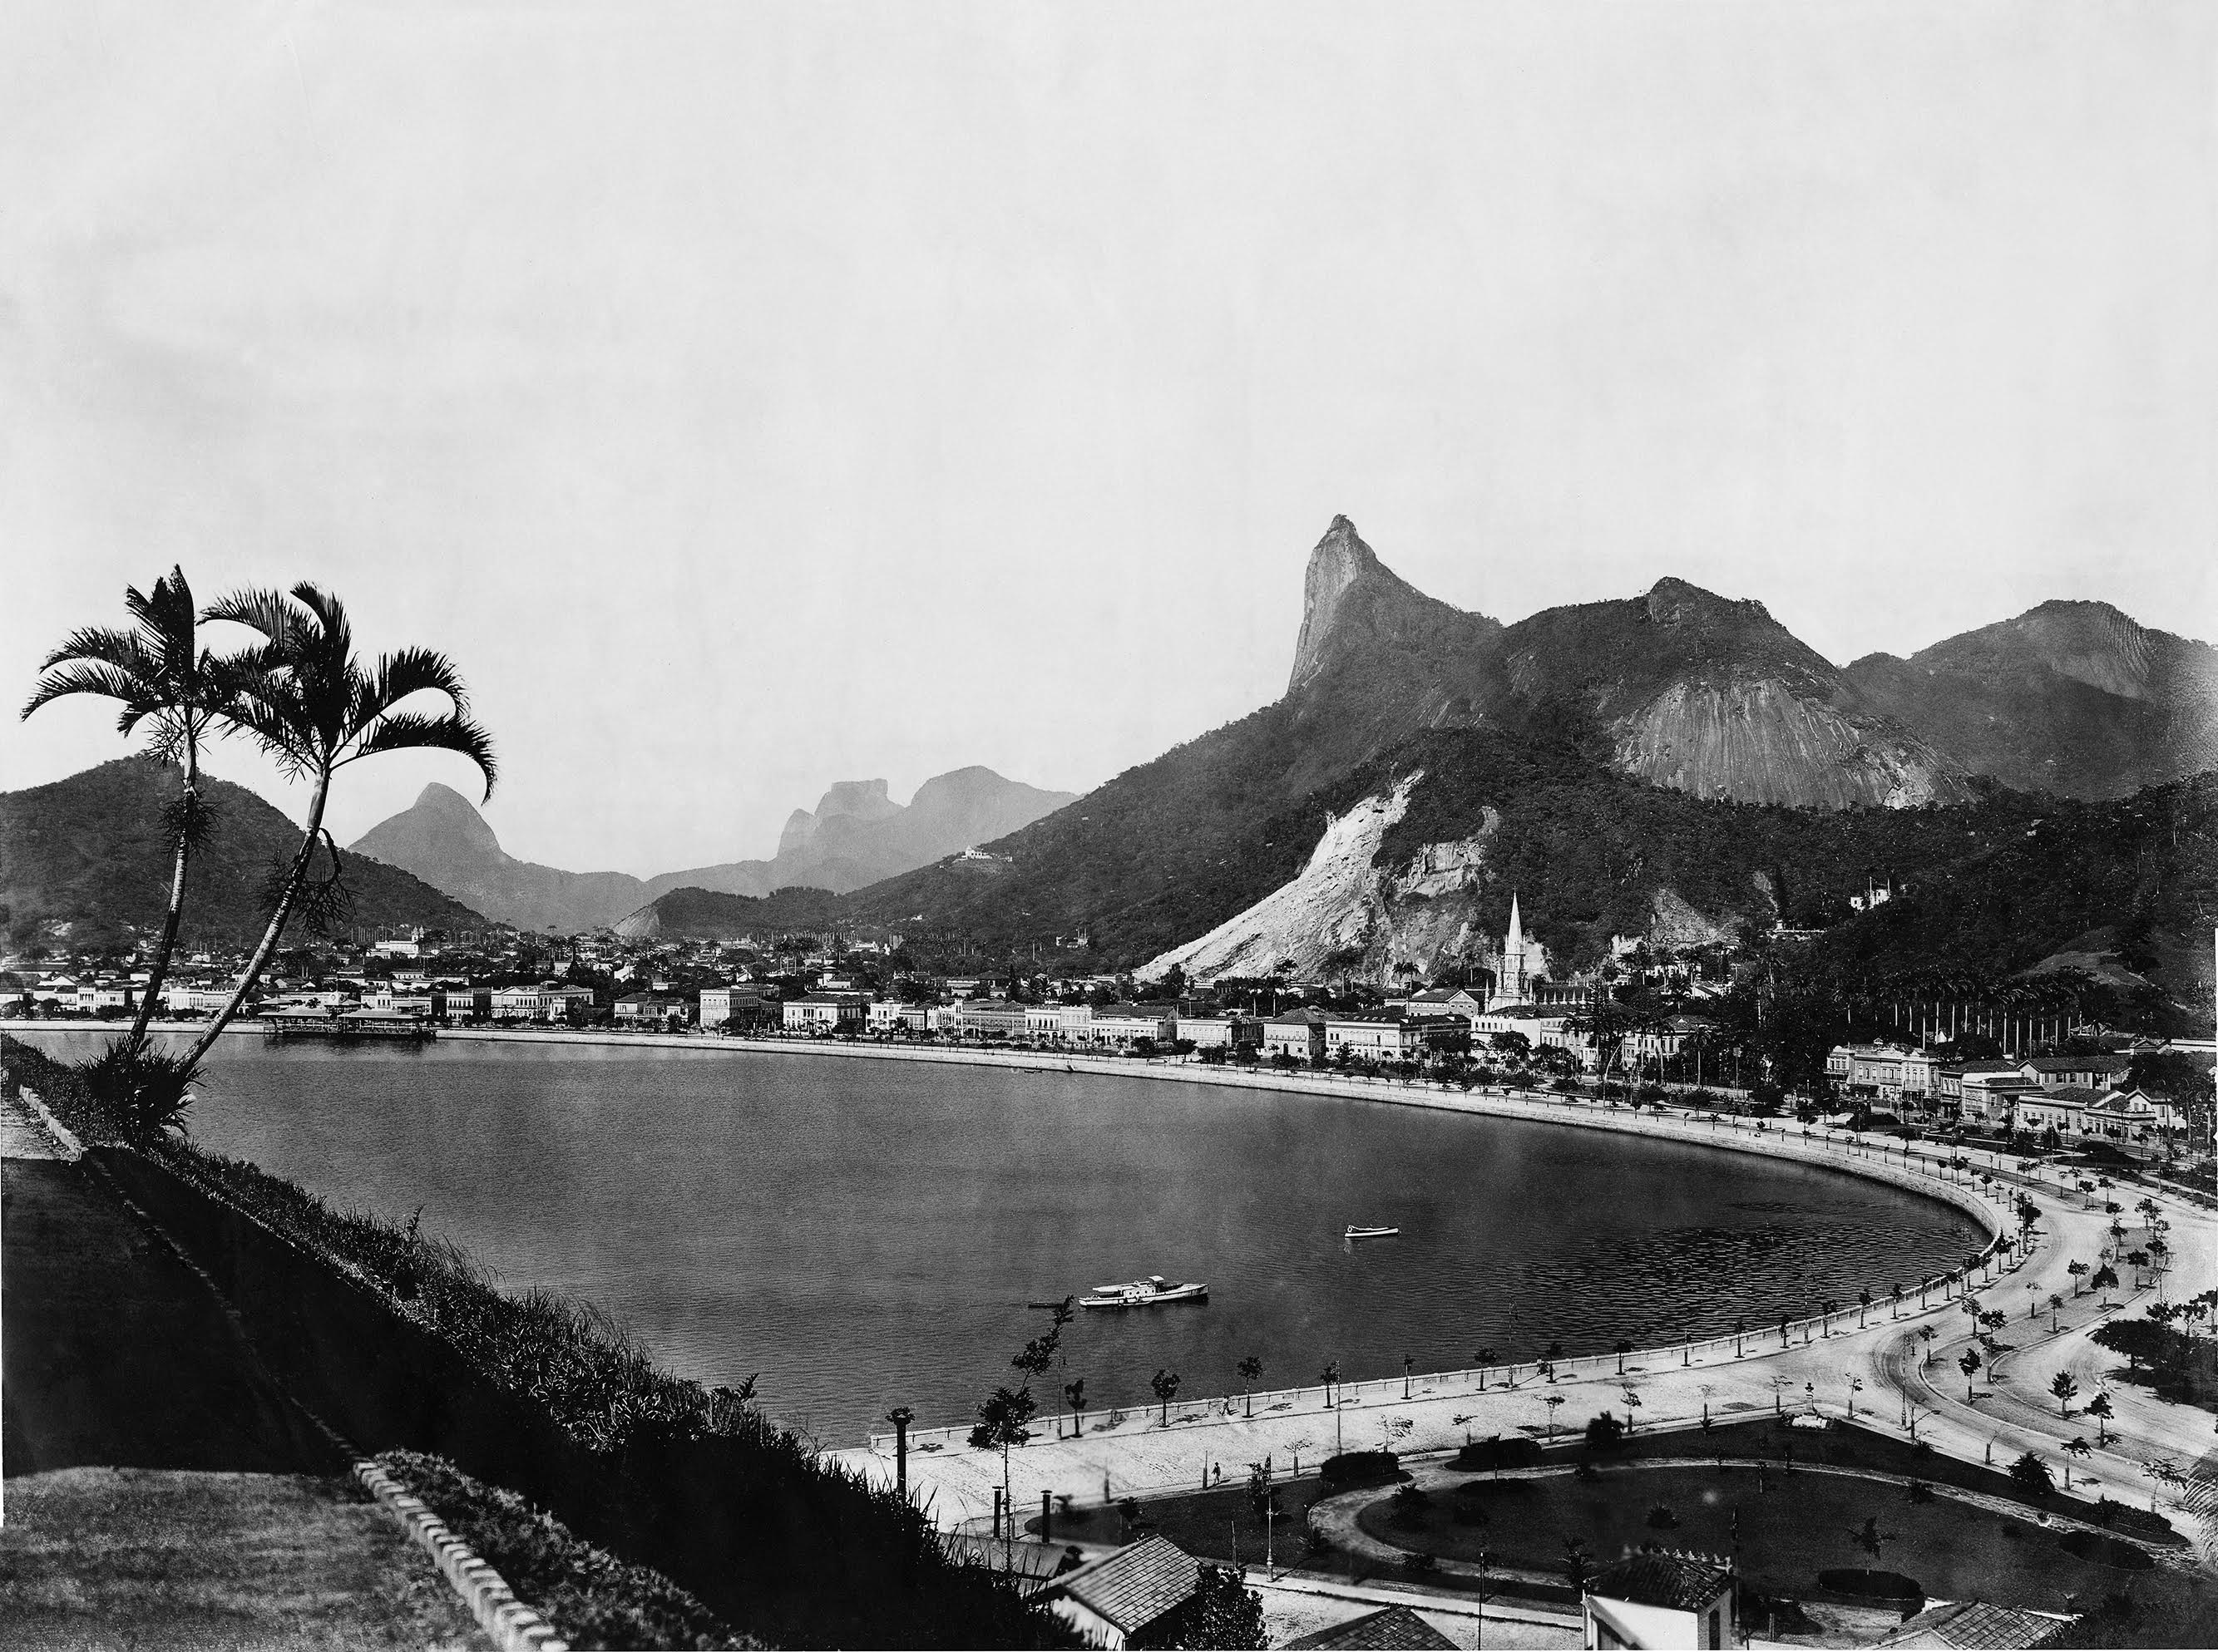 Enseada de Botafogo: essa vista seria retratada constantemente nas décadas posteriores